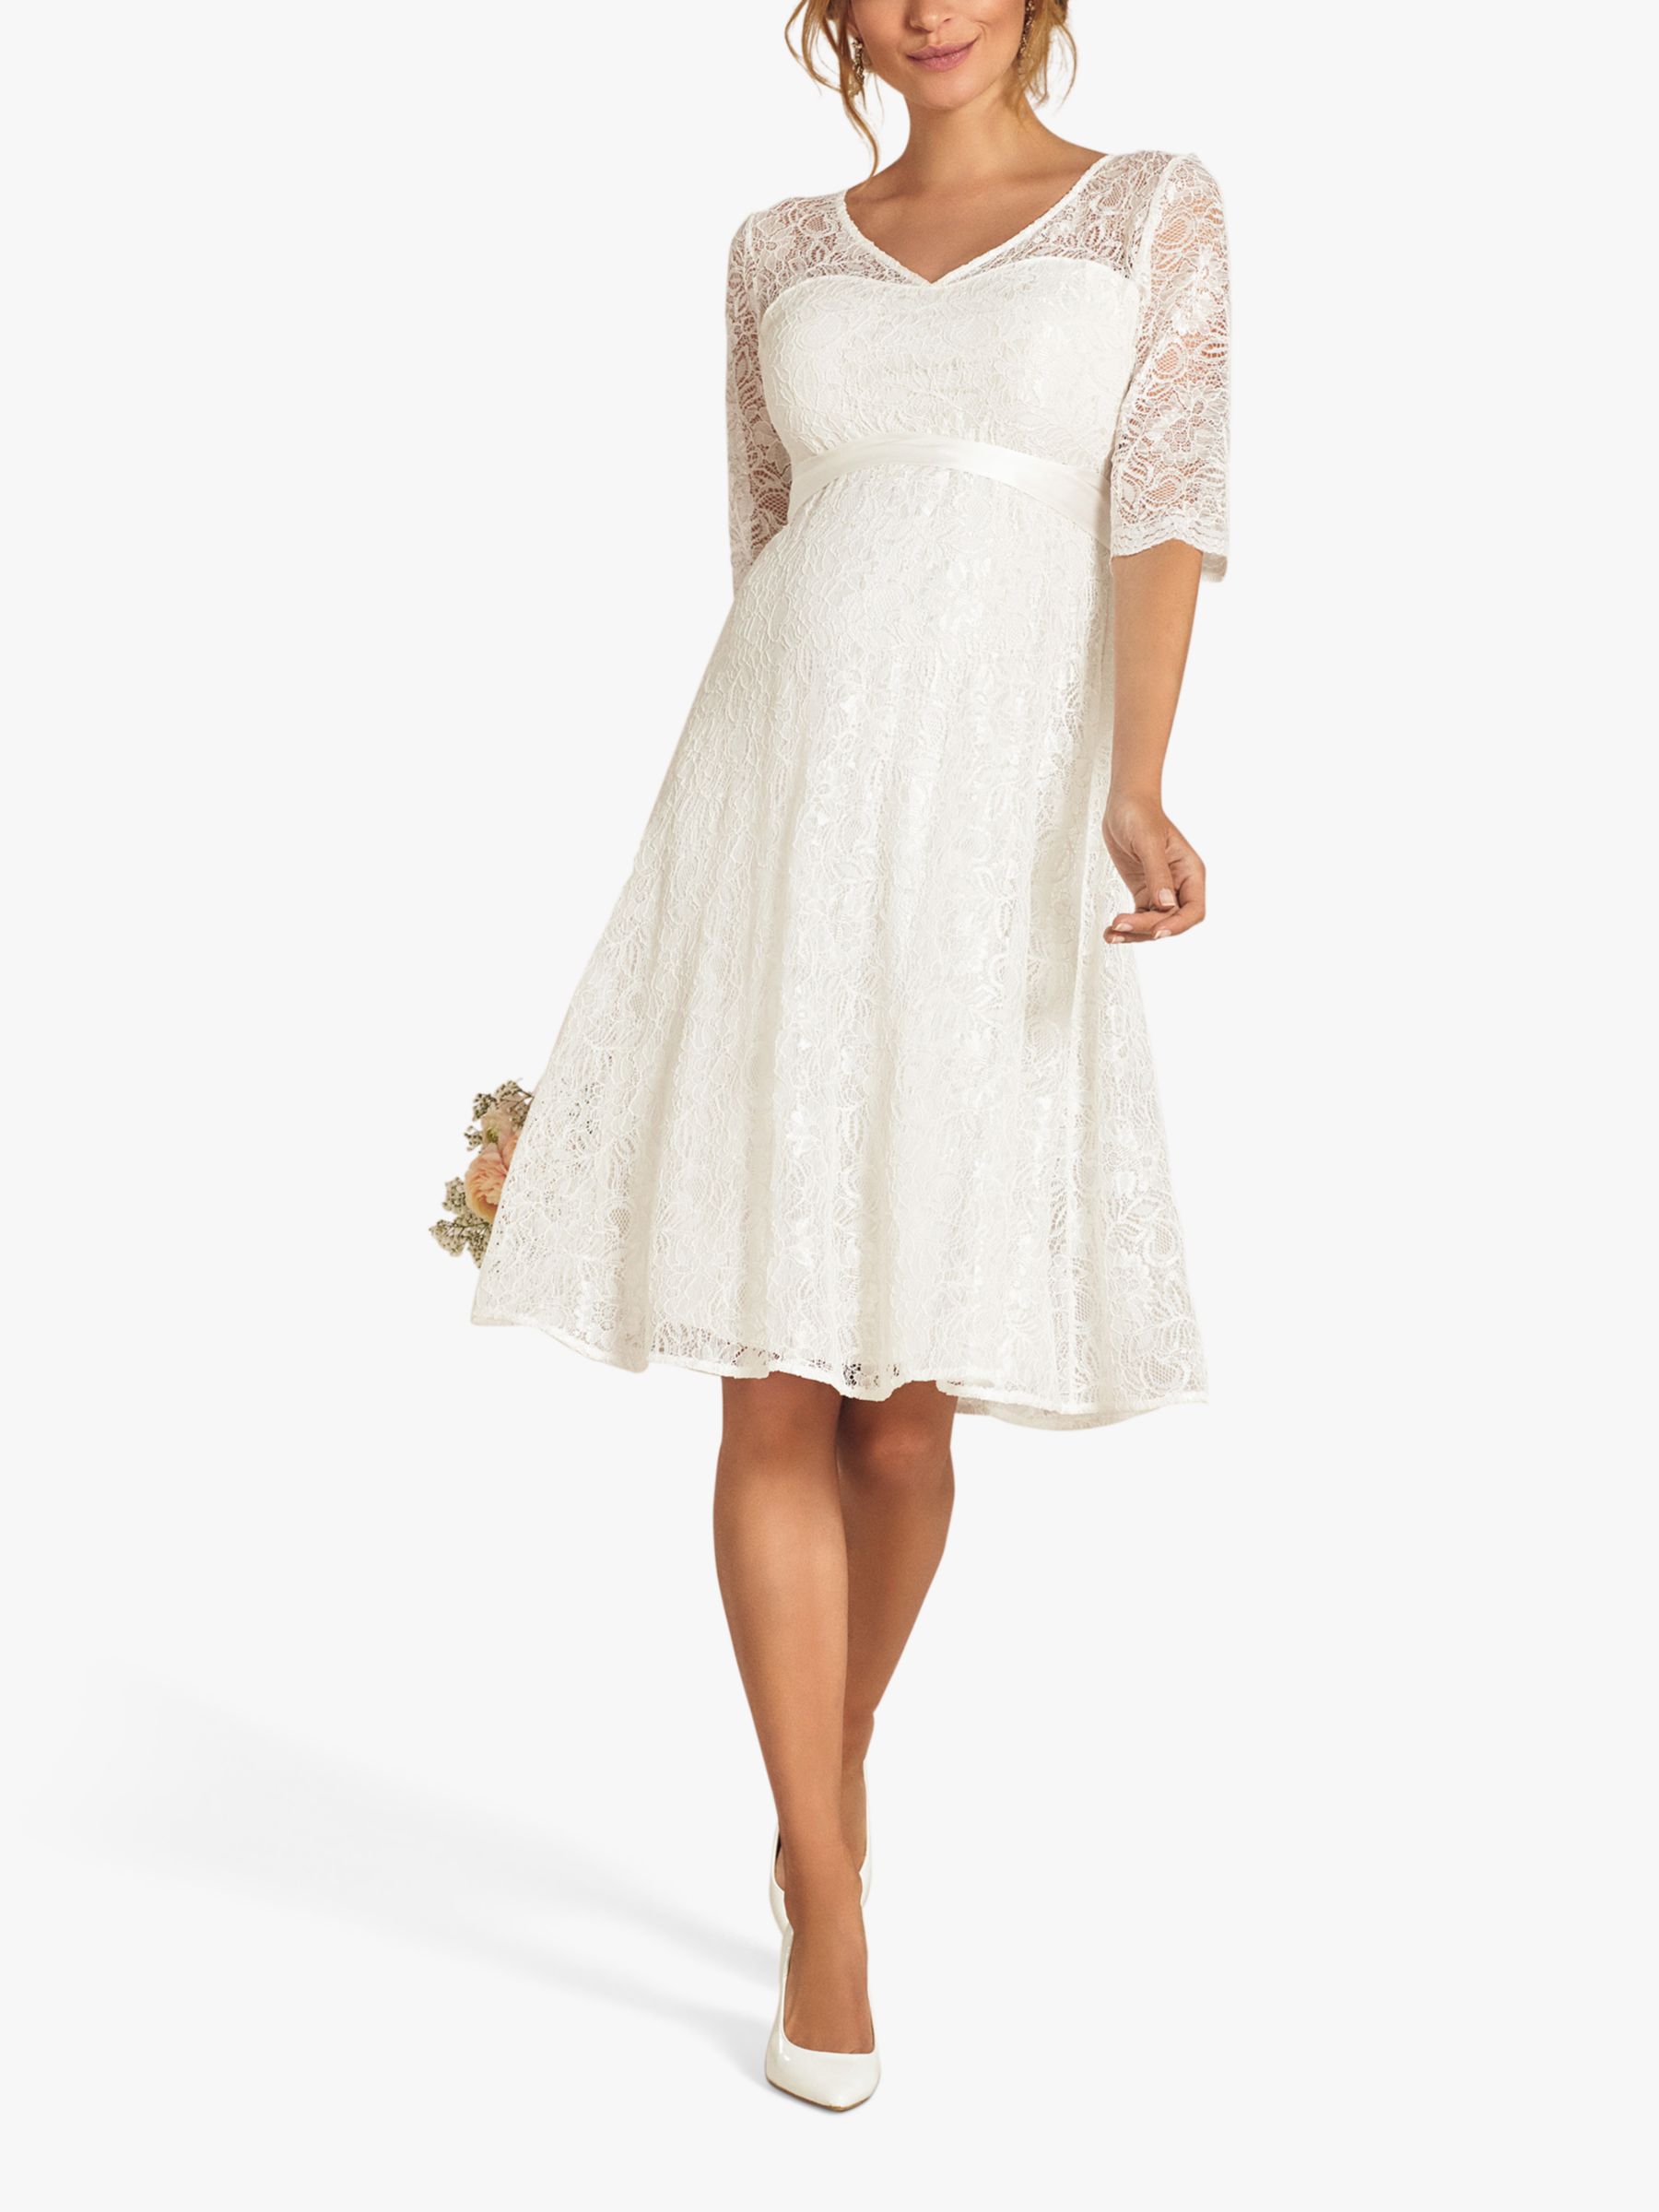 Tiffany Rose Flossie Maternity Lace Short Wedding Dress, Ivory, 6-8